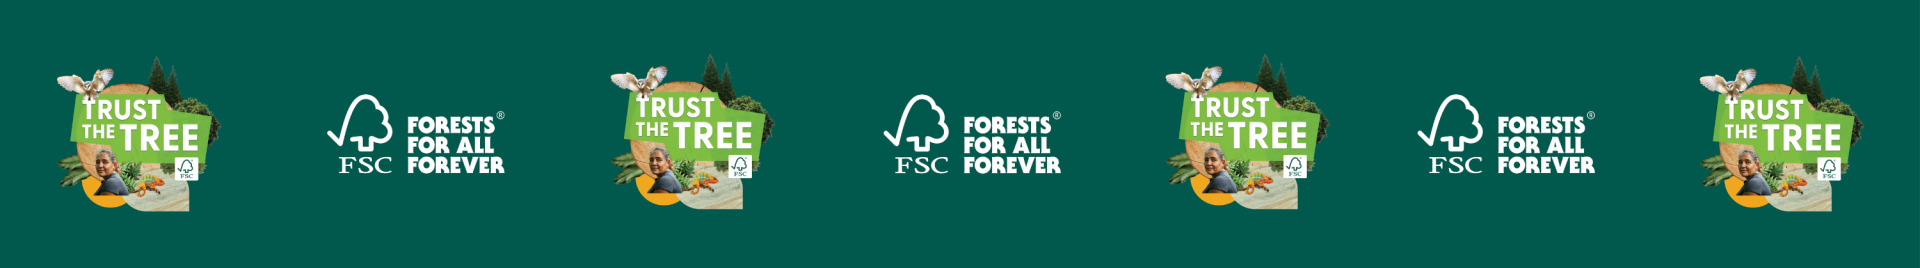 Forest week logo banner